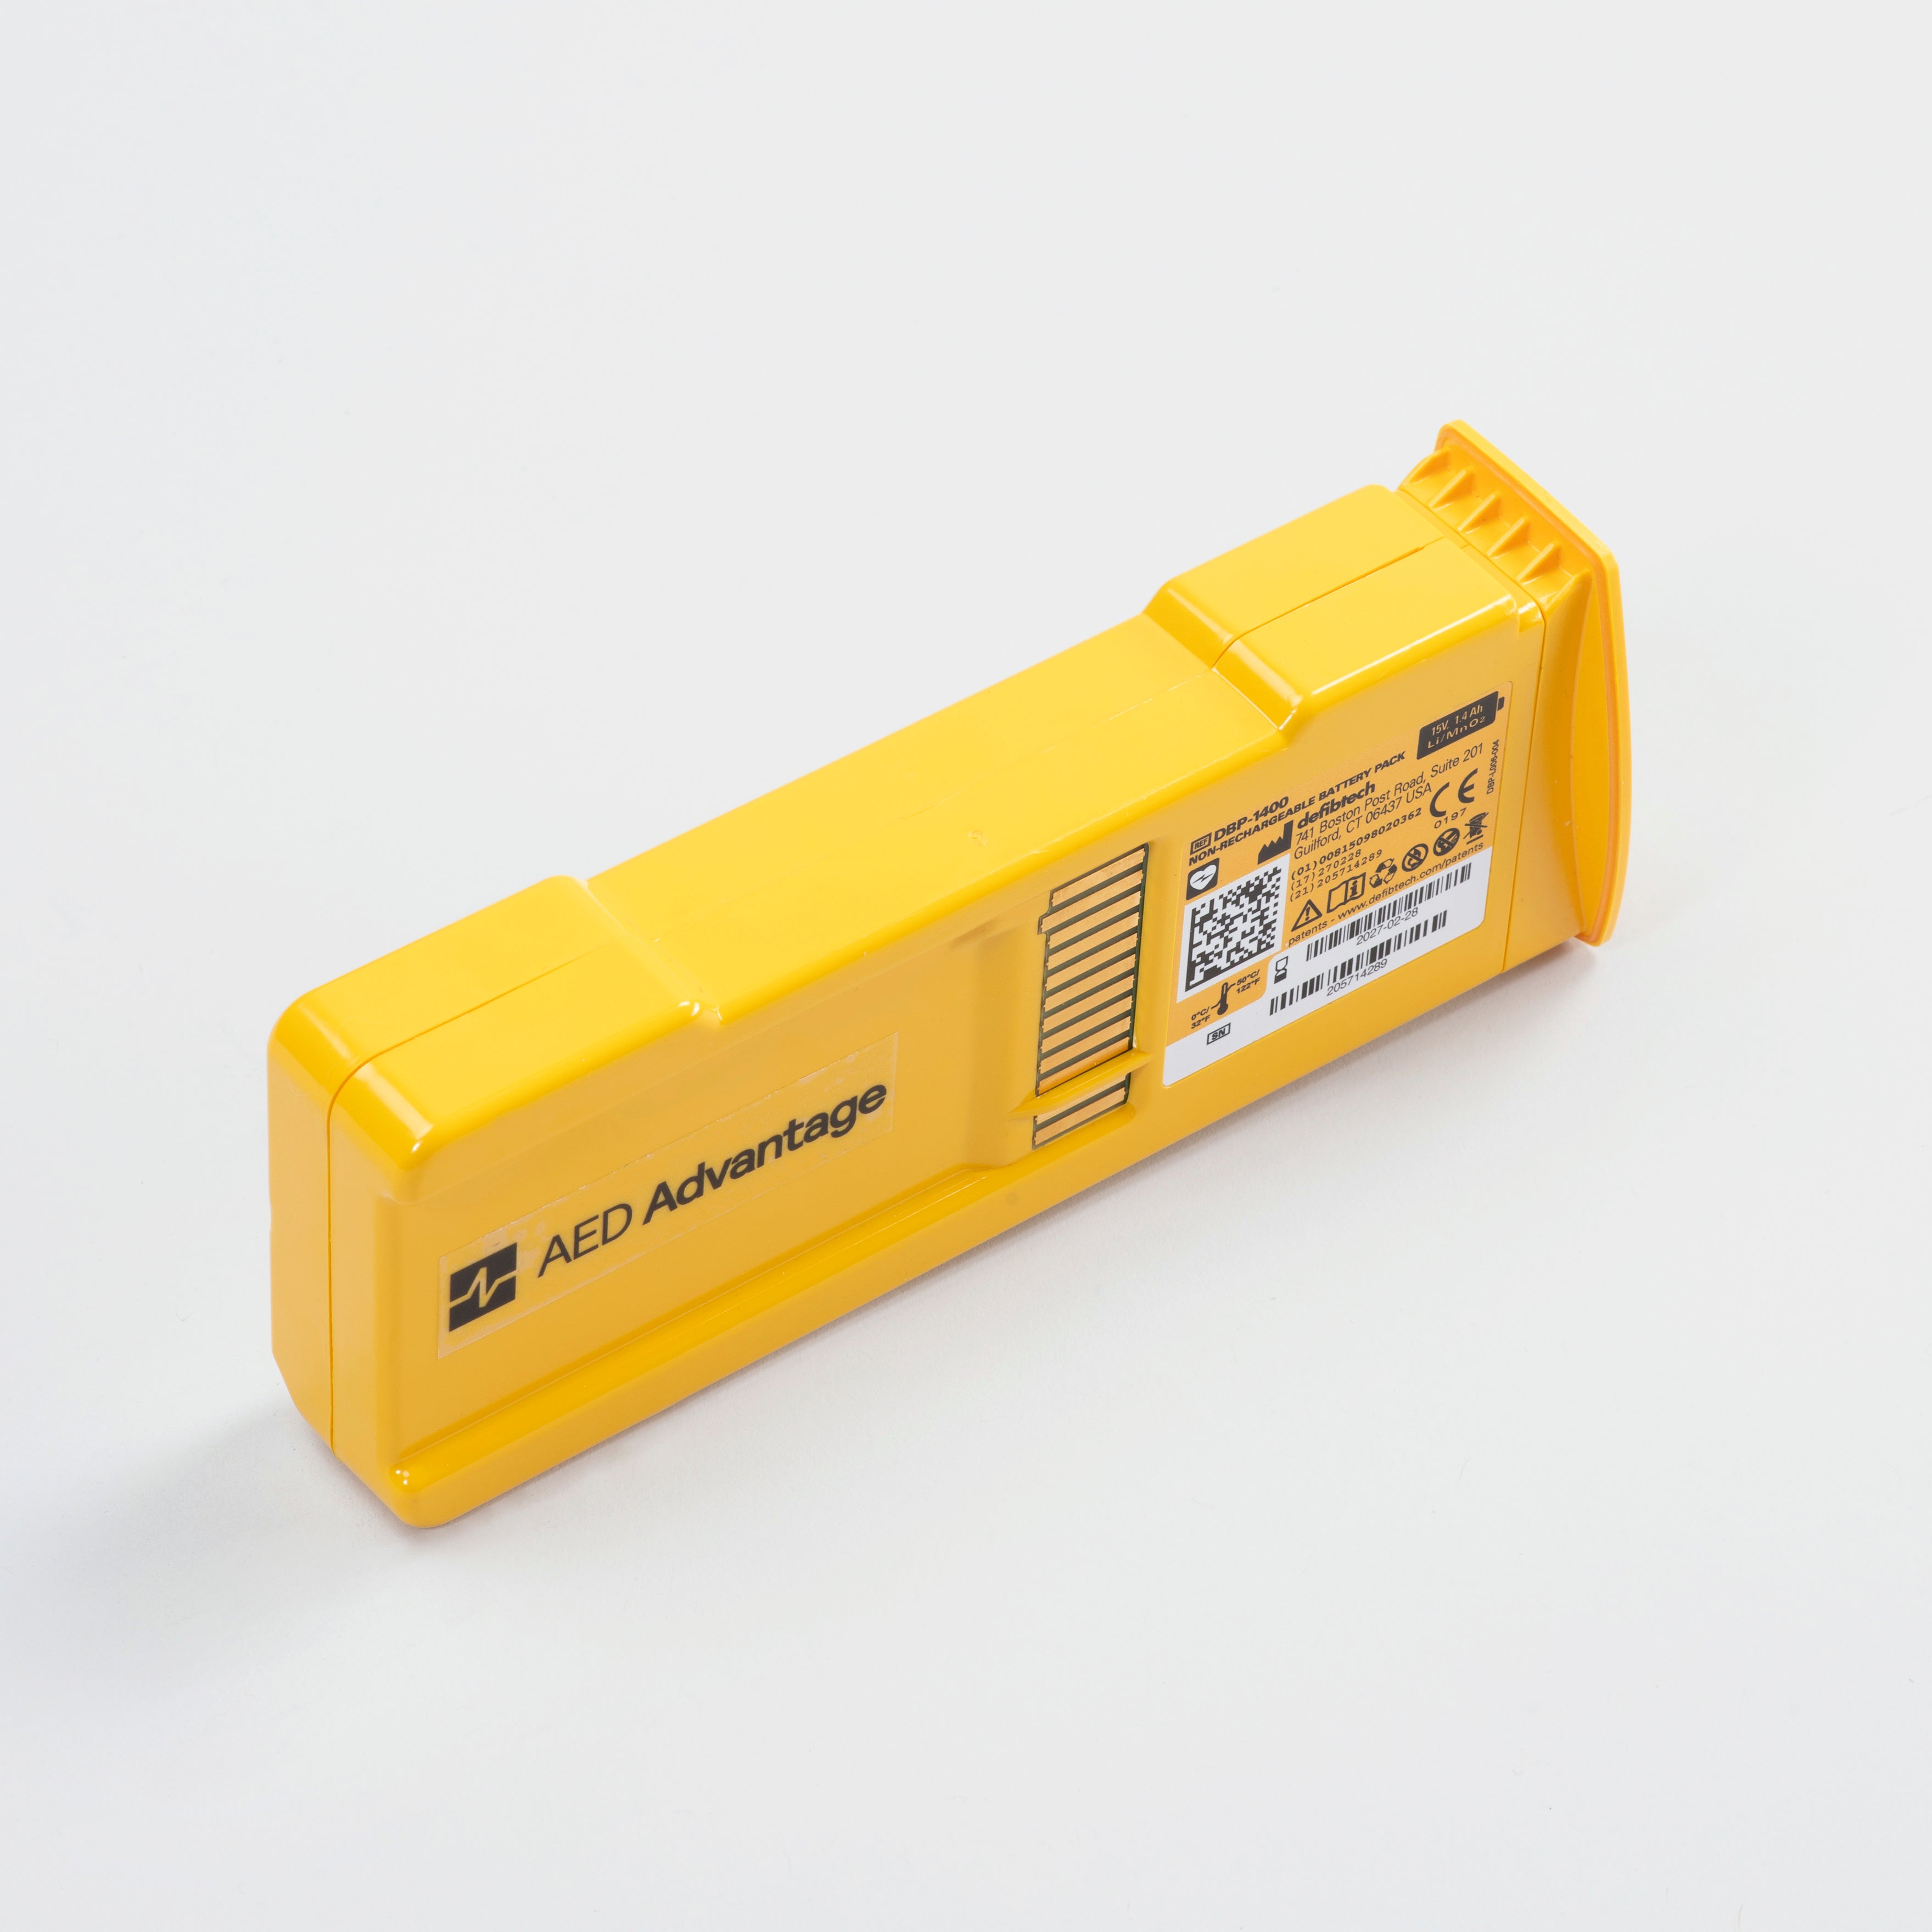 A rectangular yellow defibtech lifeline aed battery pack